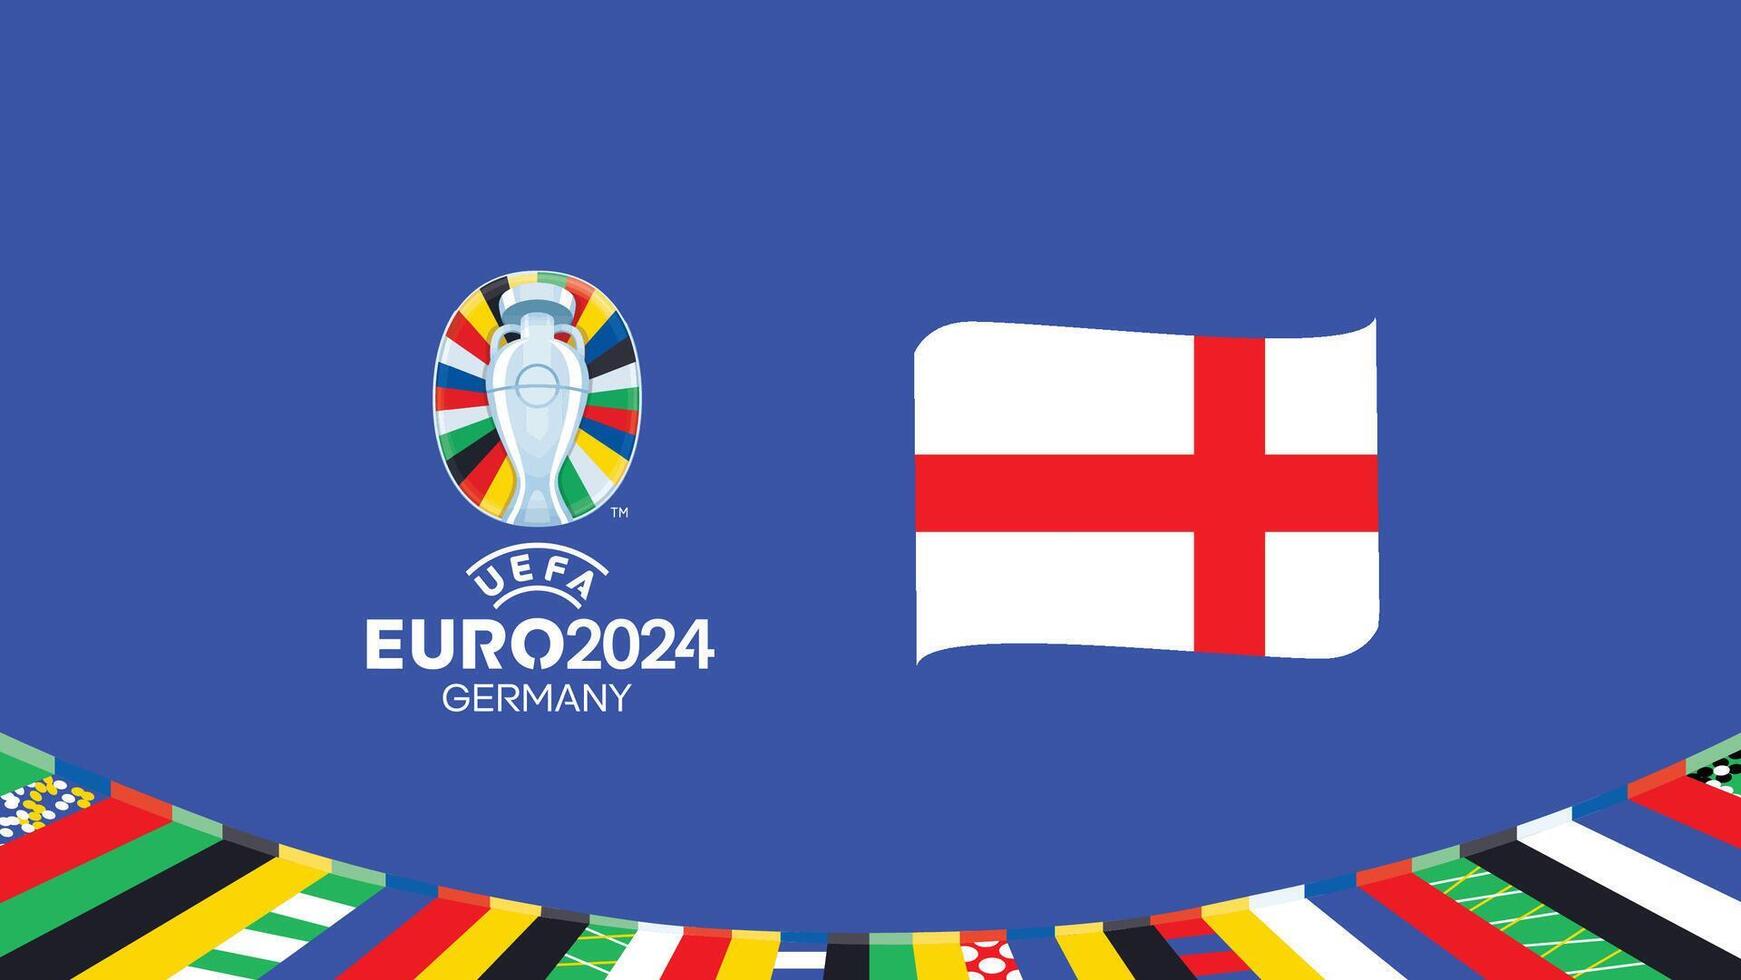 euro 2024 Engeland vlag lint teams ontwerp met officieel symbool logo abstract landen Europese Amerikaans voetbal illustratie vector